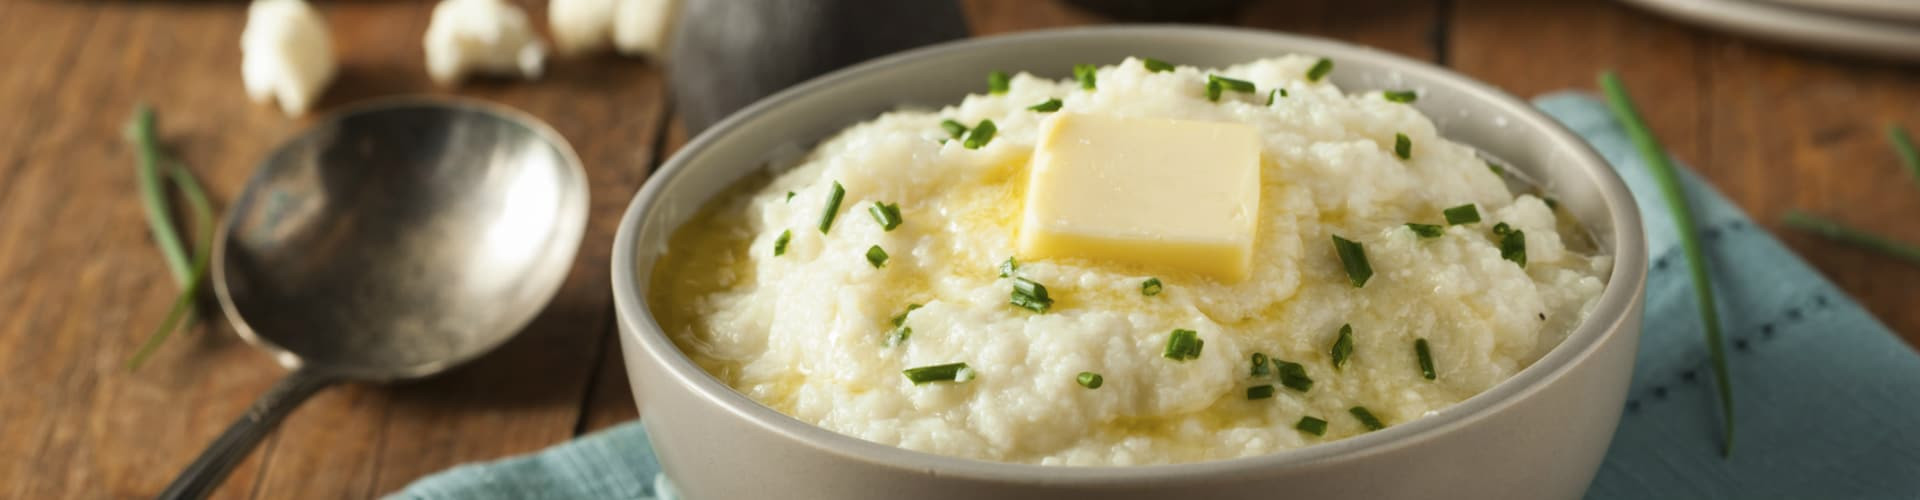 Fiber In Mashed Potatoes
 Best Cauliflower Mashed Potato Recipe Under 60 Calories